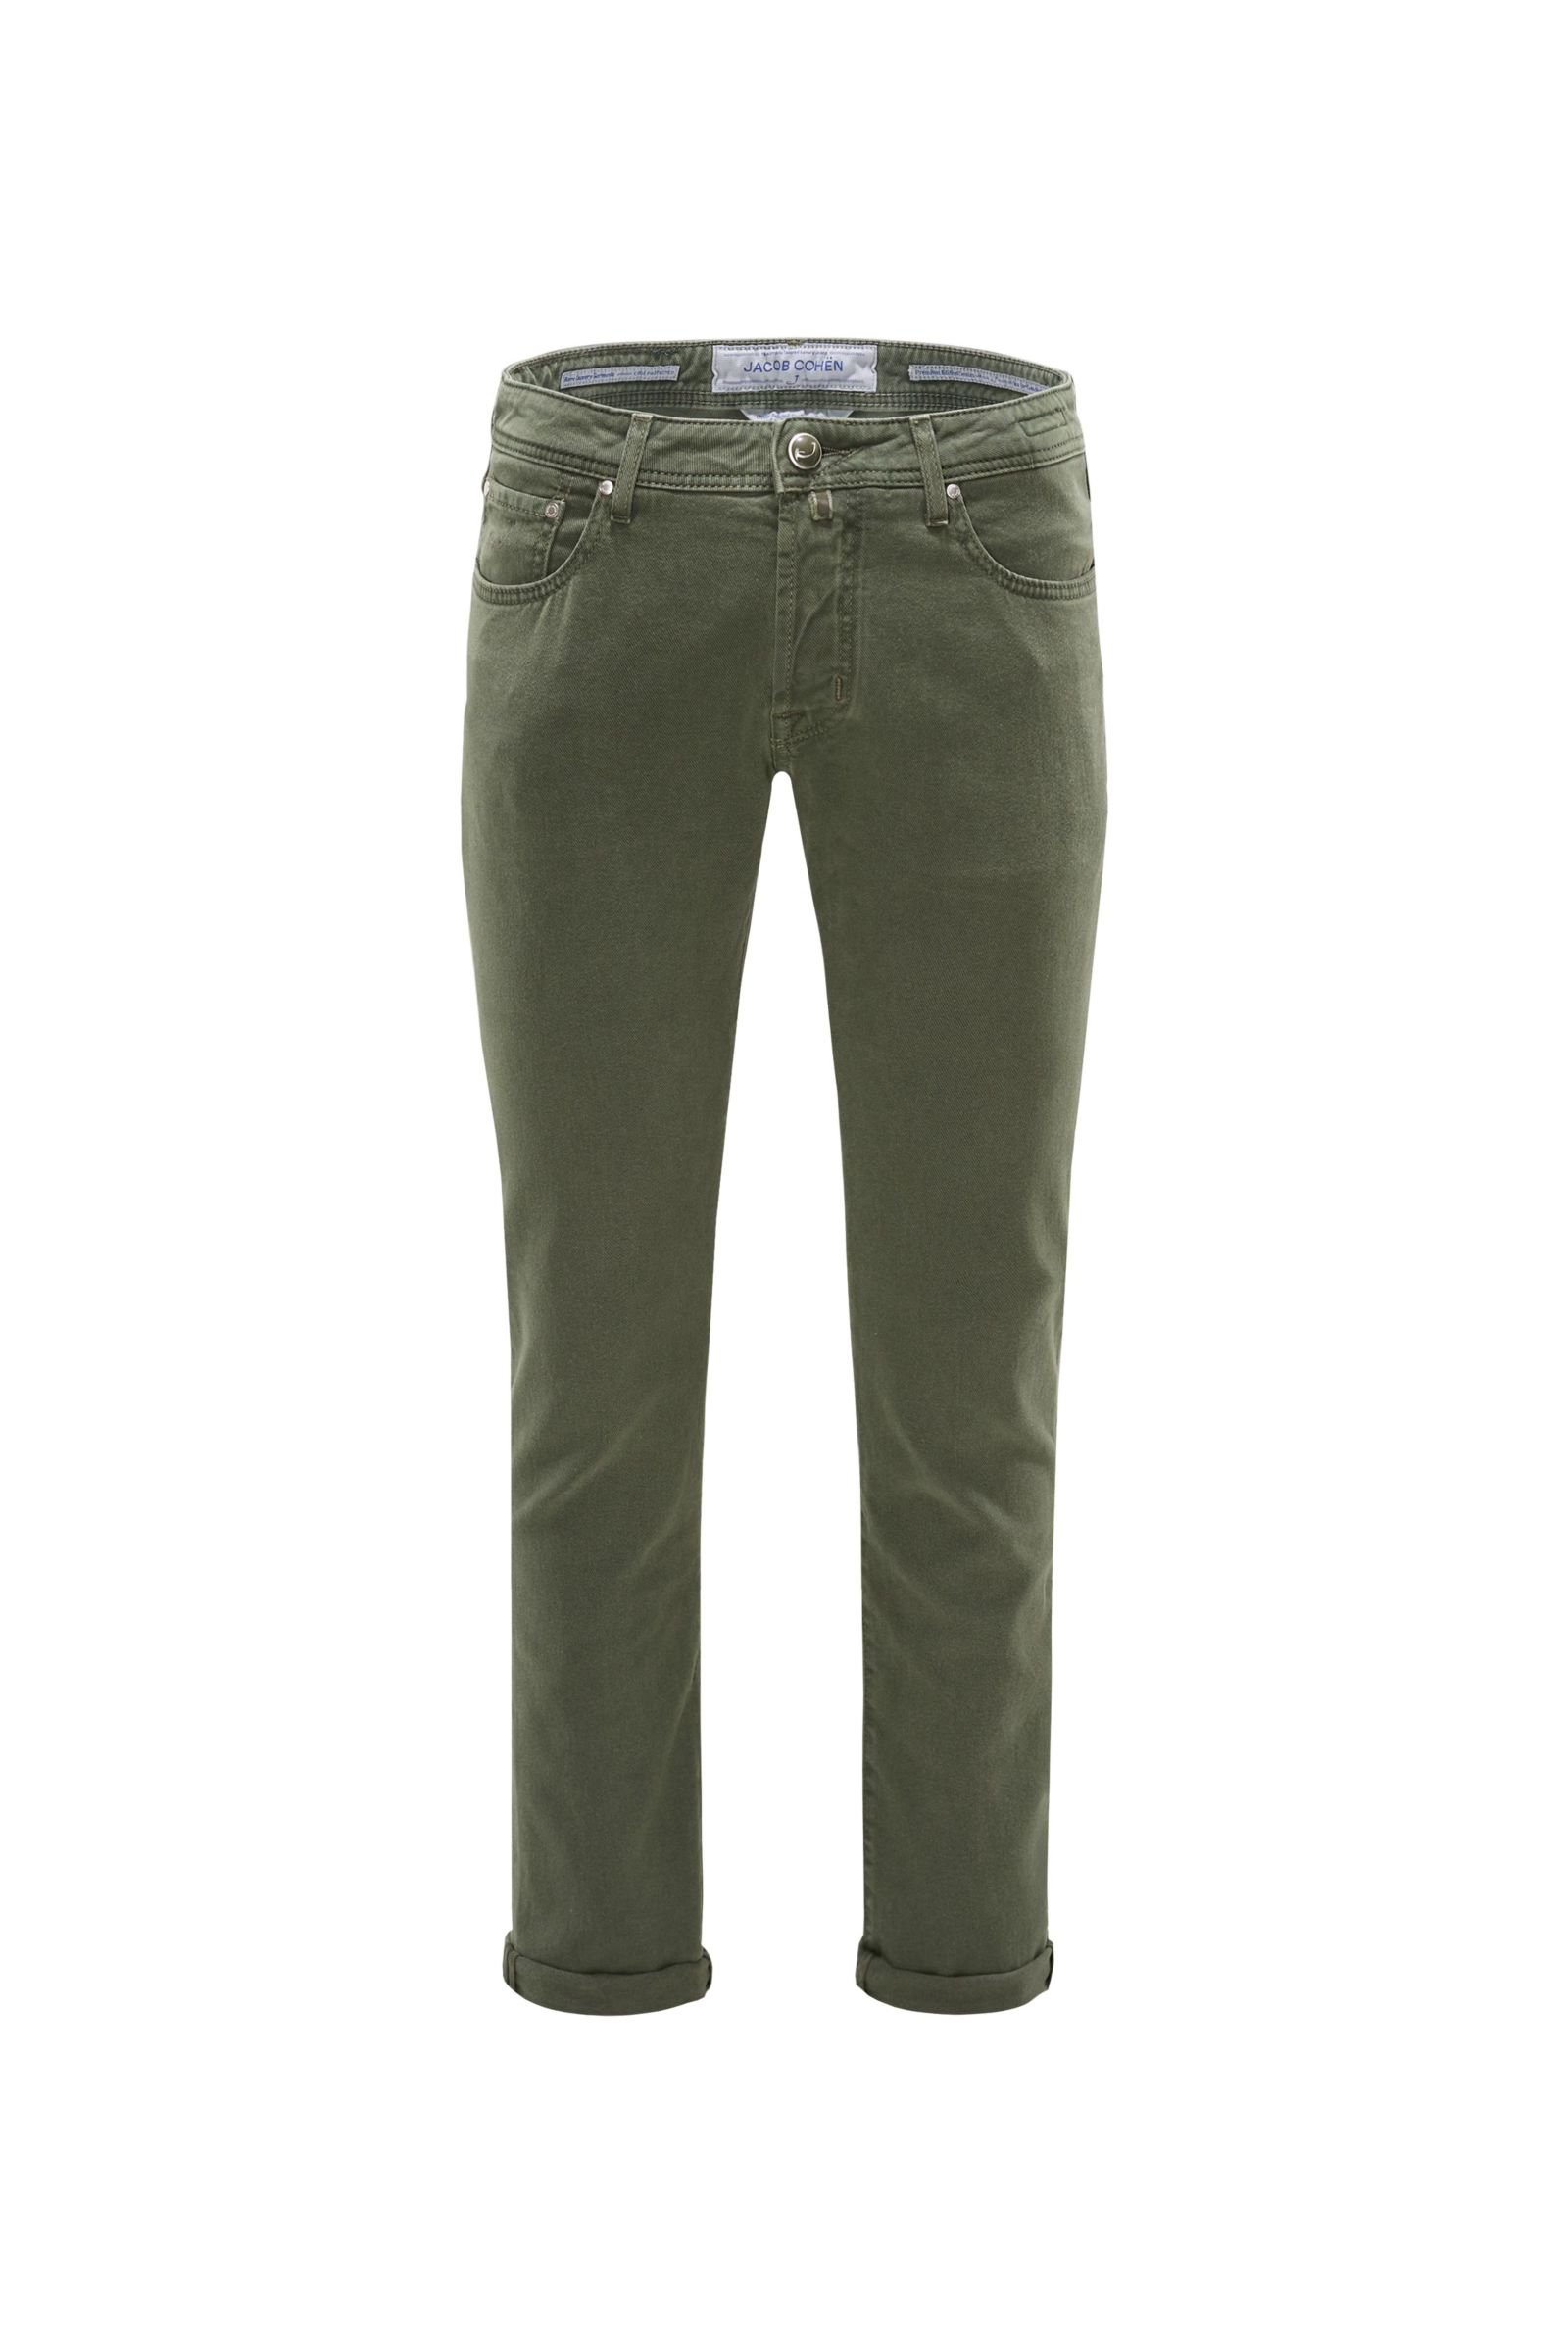 Cotton trousers 'J688 Comfort Slim Fit' grey-green